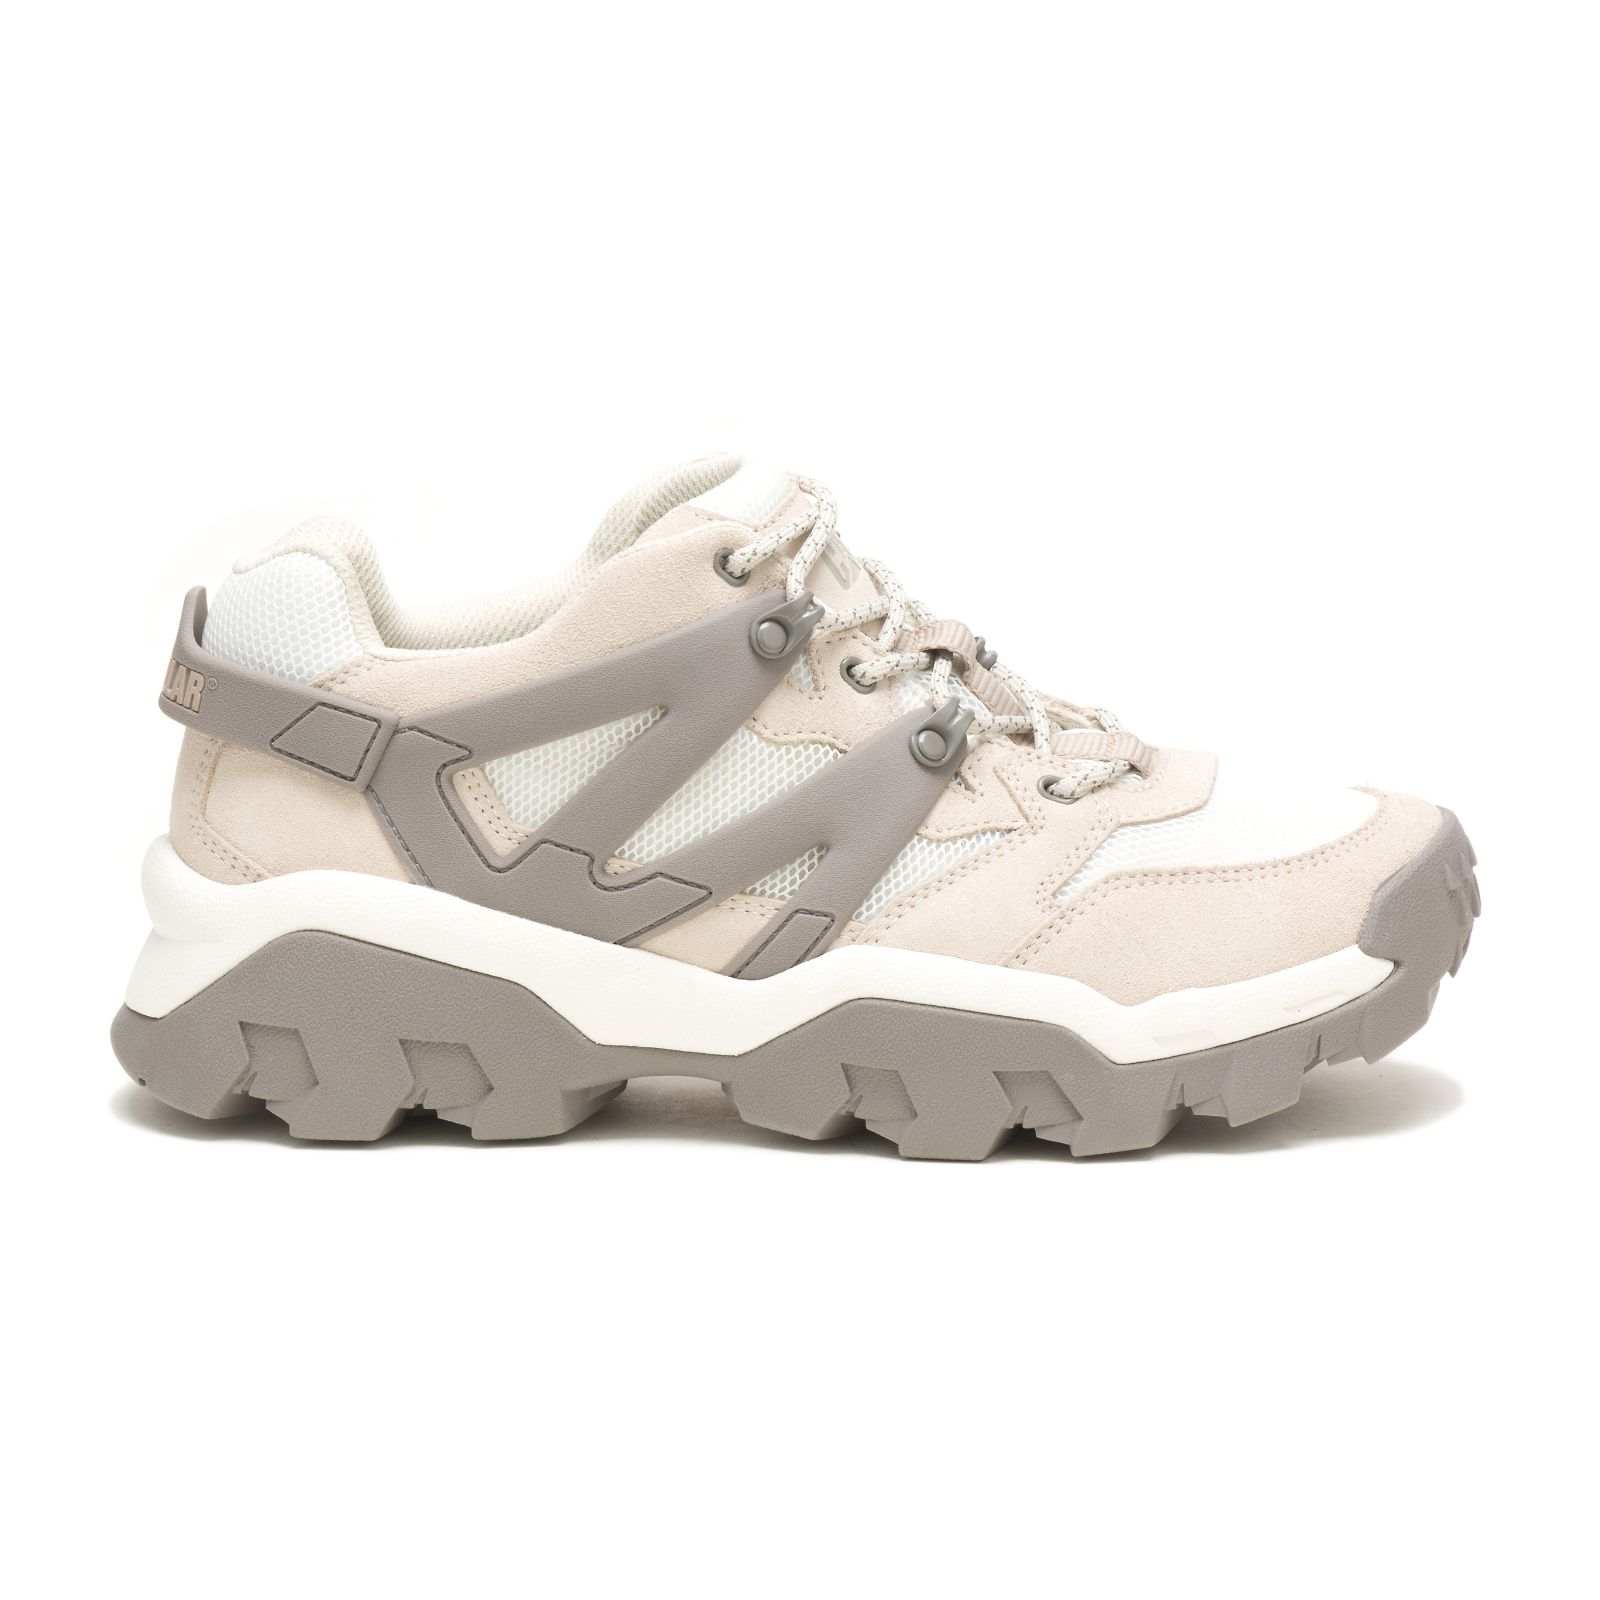 White Caterpillar Reactor Men's Sneakers | Cat-853479